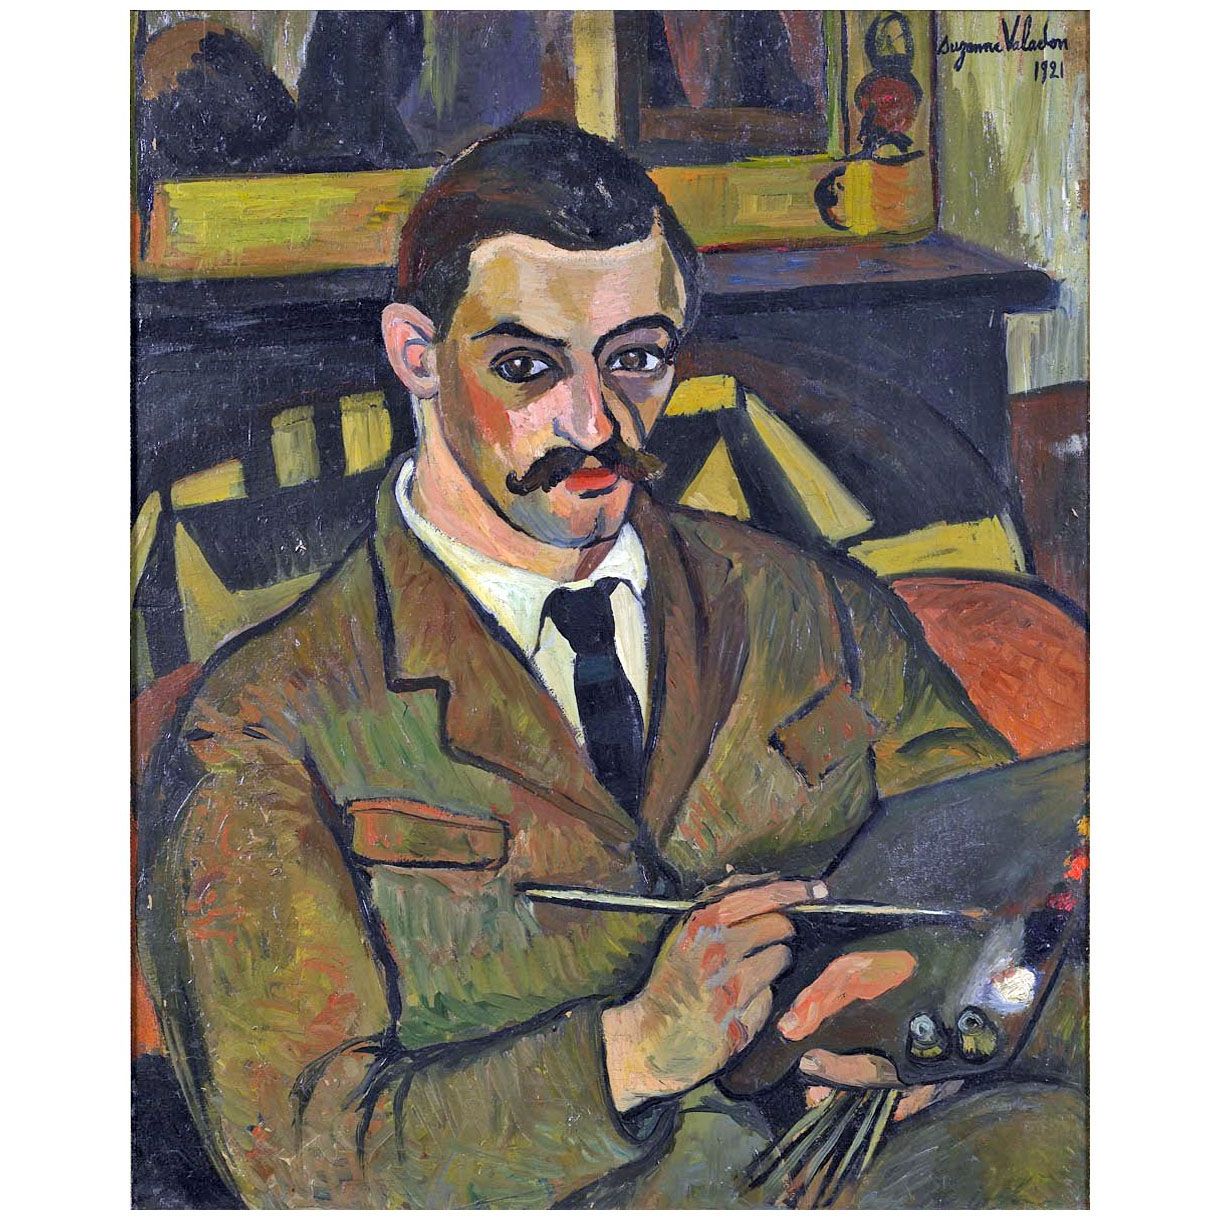 Suzanne Valadon. Peintre Maurice Utrillo. 1921. Musee de Montmartre